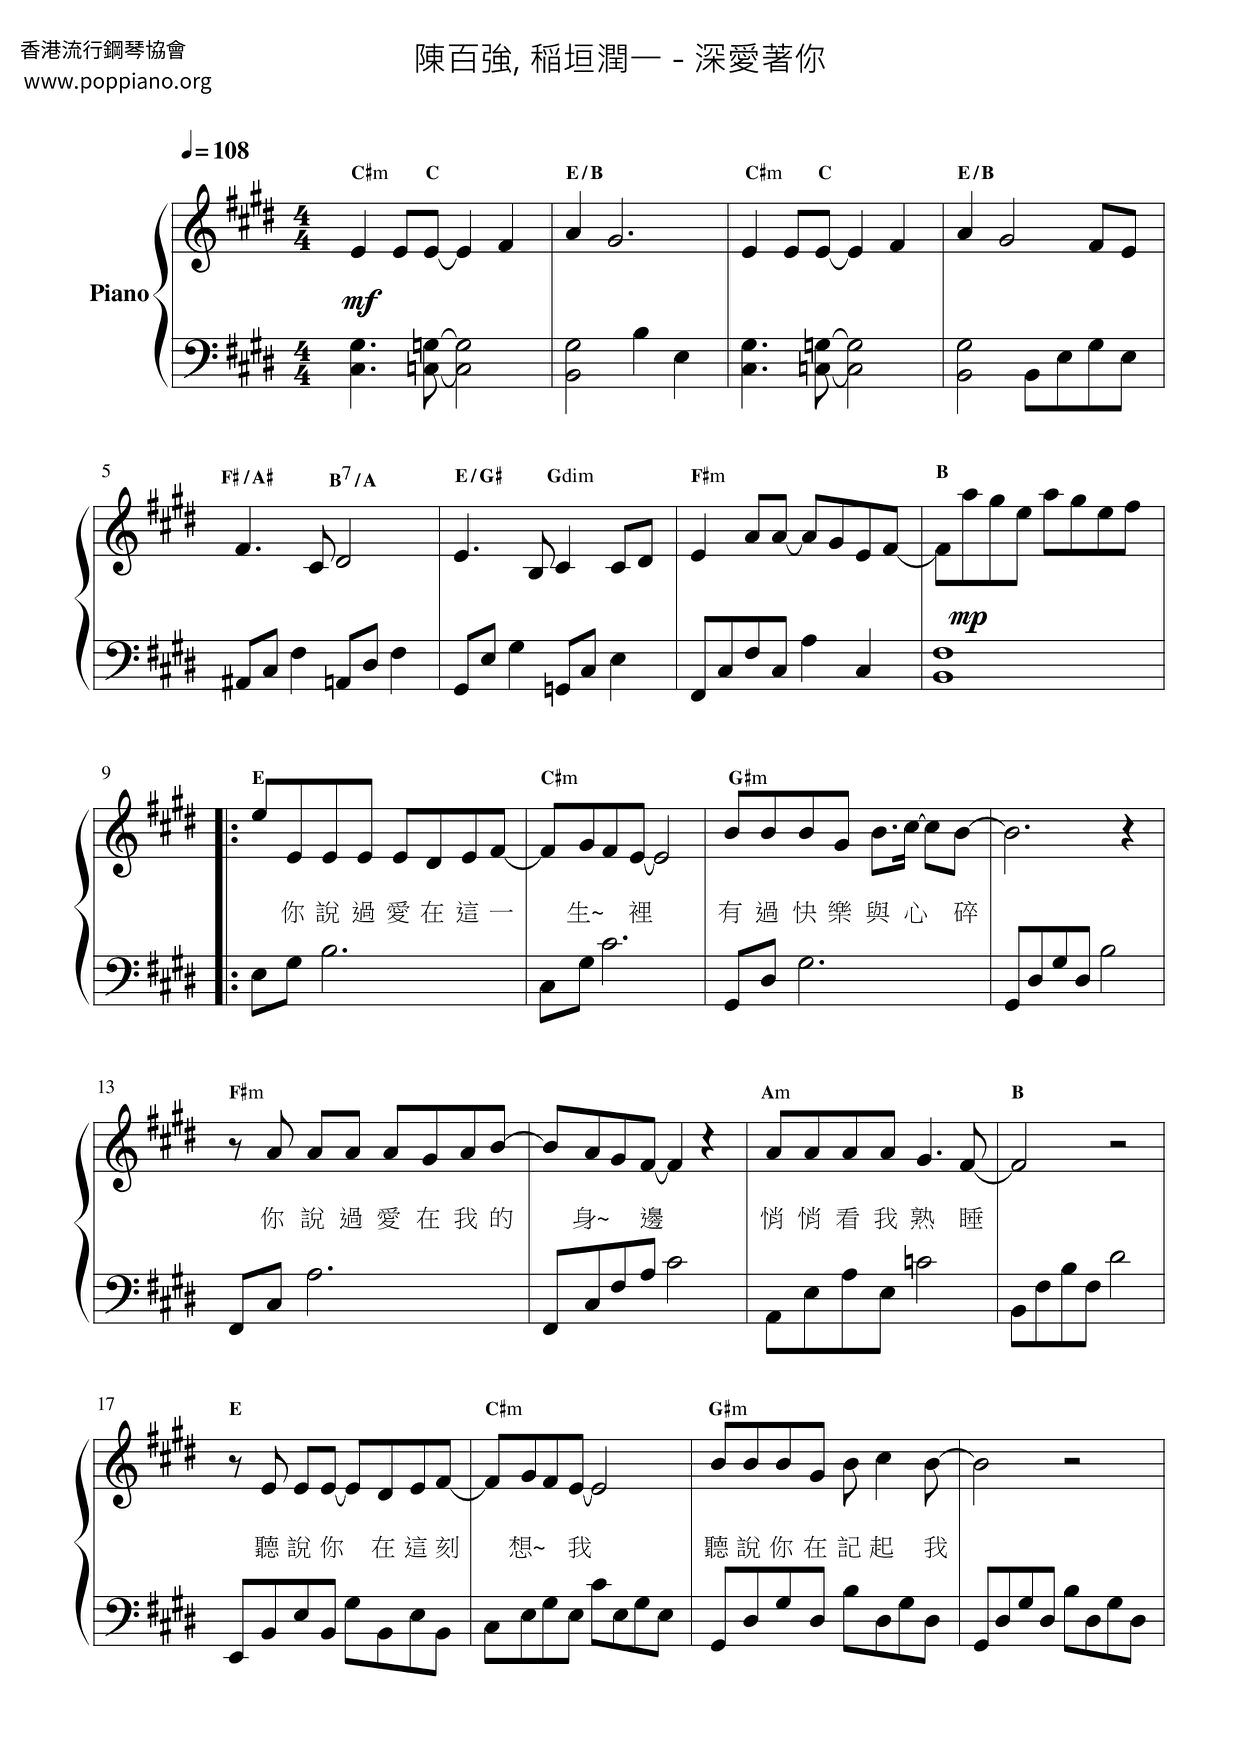 Danny Chan-Deeply Love You Sheet Music pdf, -誰がために... 楽譜 - Free Score